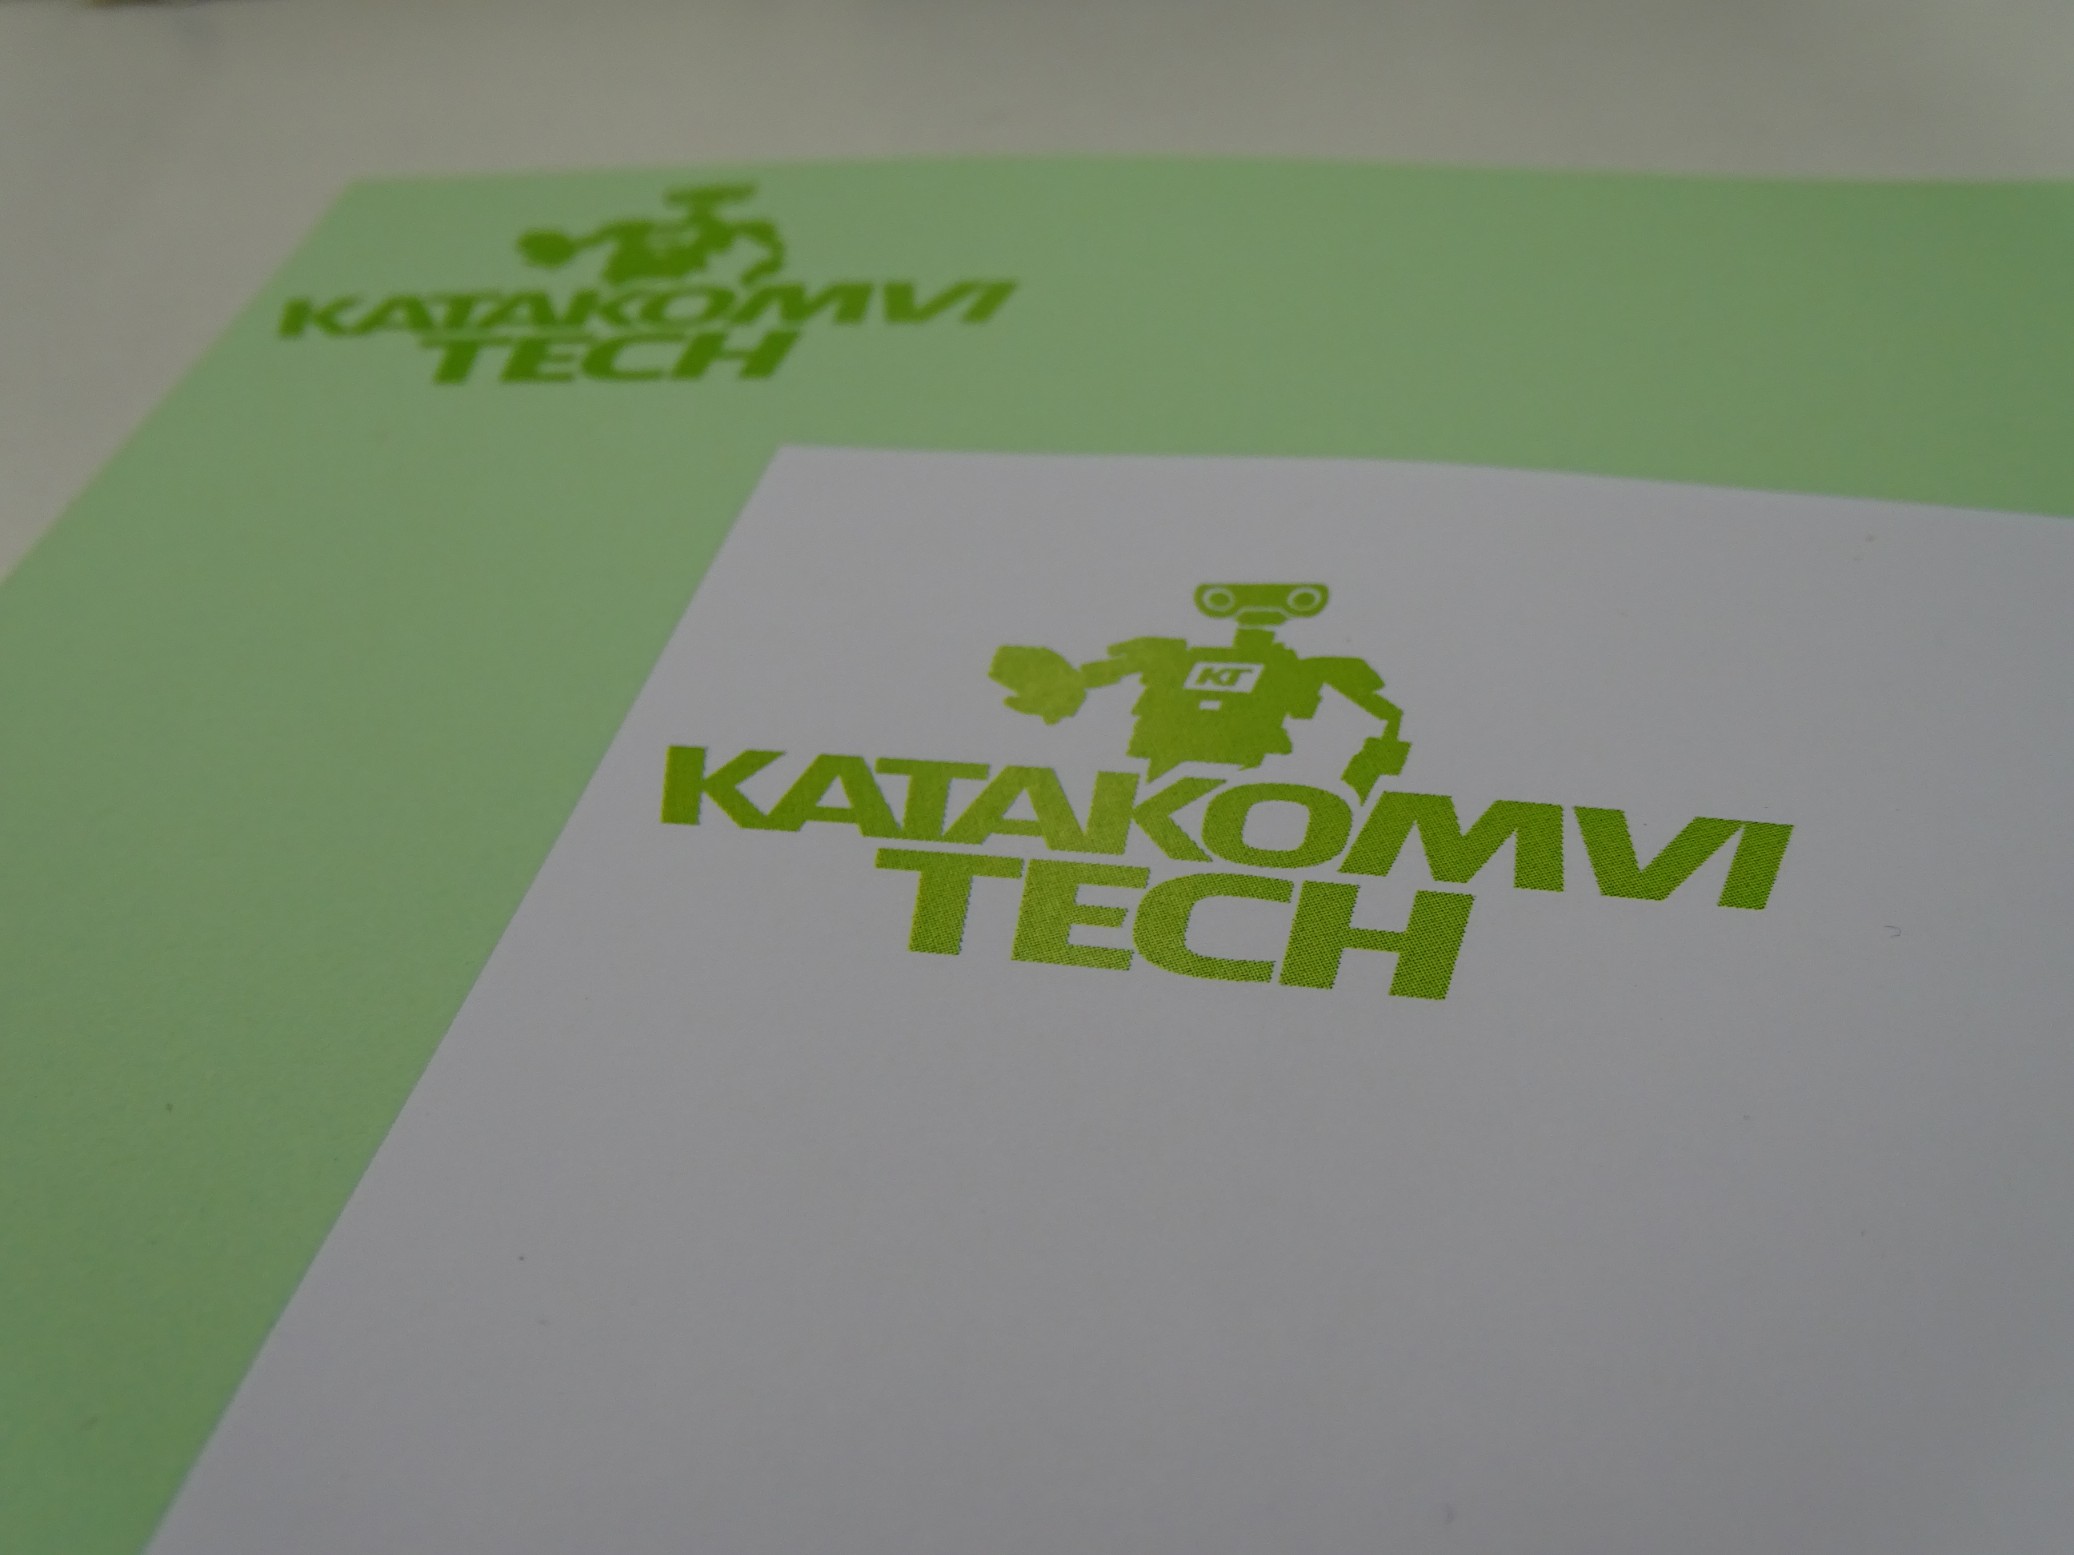 H ομάδα της Κατακόμβης “Katakomvi Tech” στα προκριματικά του Πανελληνίου Διαγωνισμού Ρομποτικής FLL2018